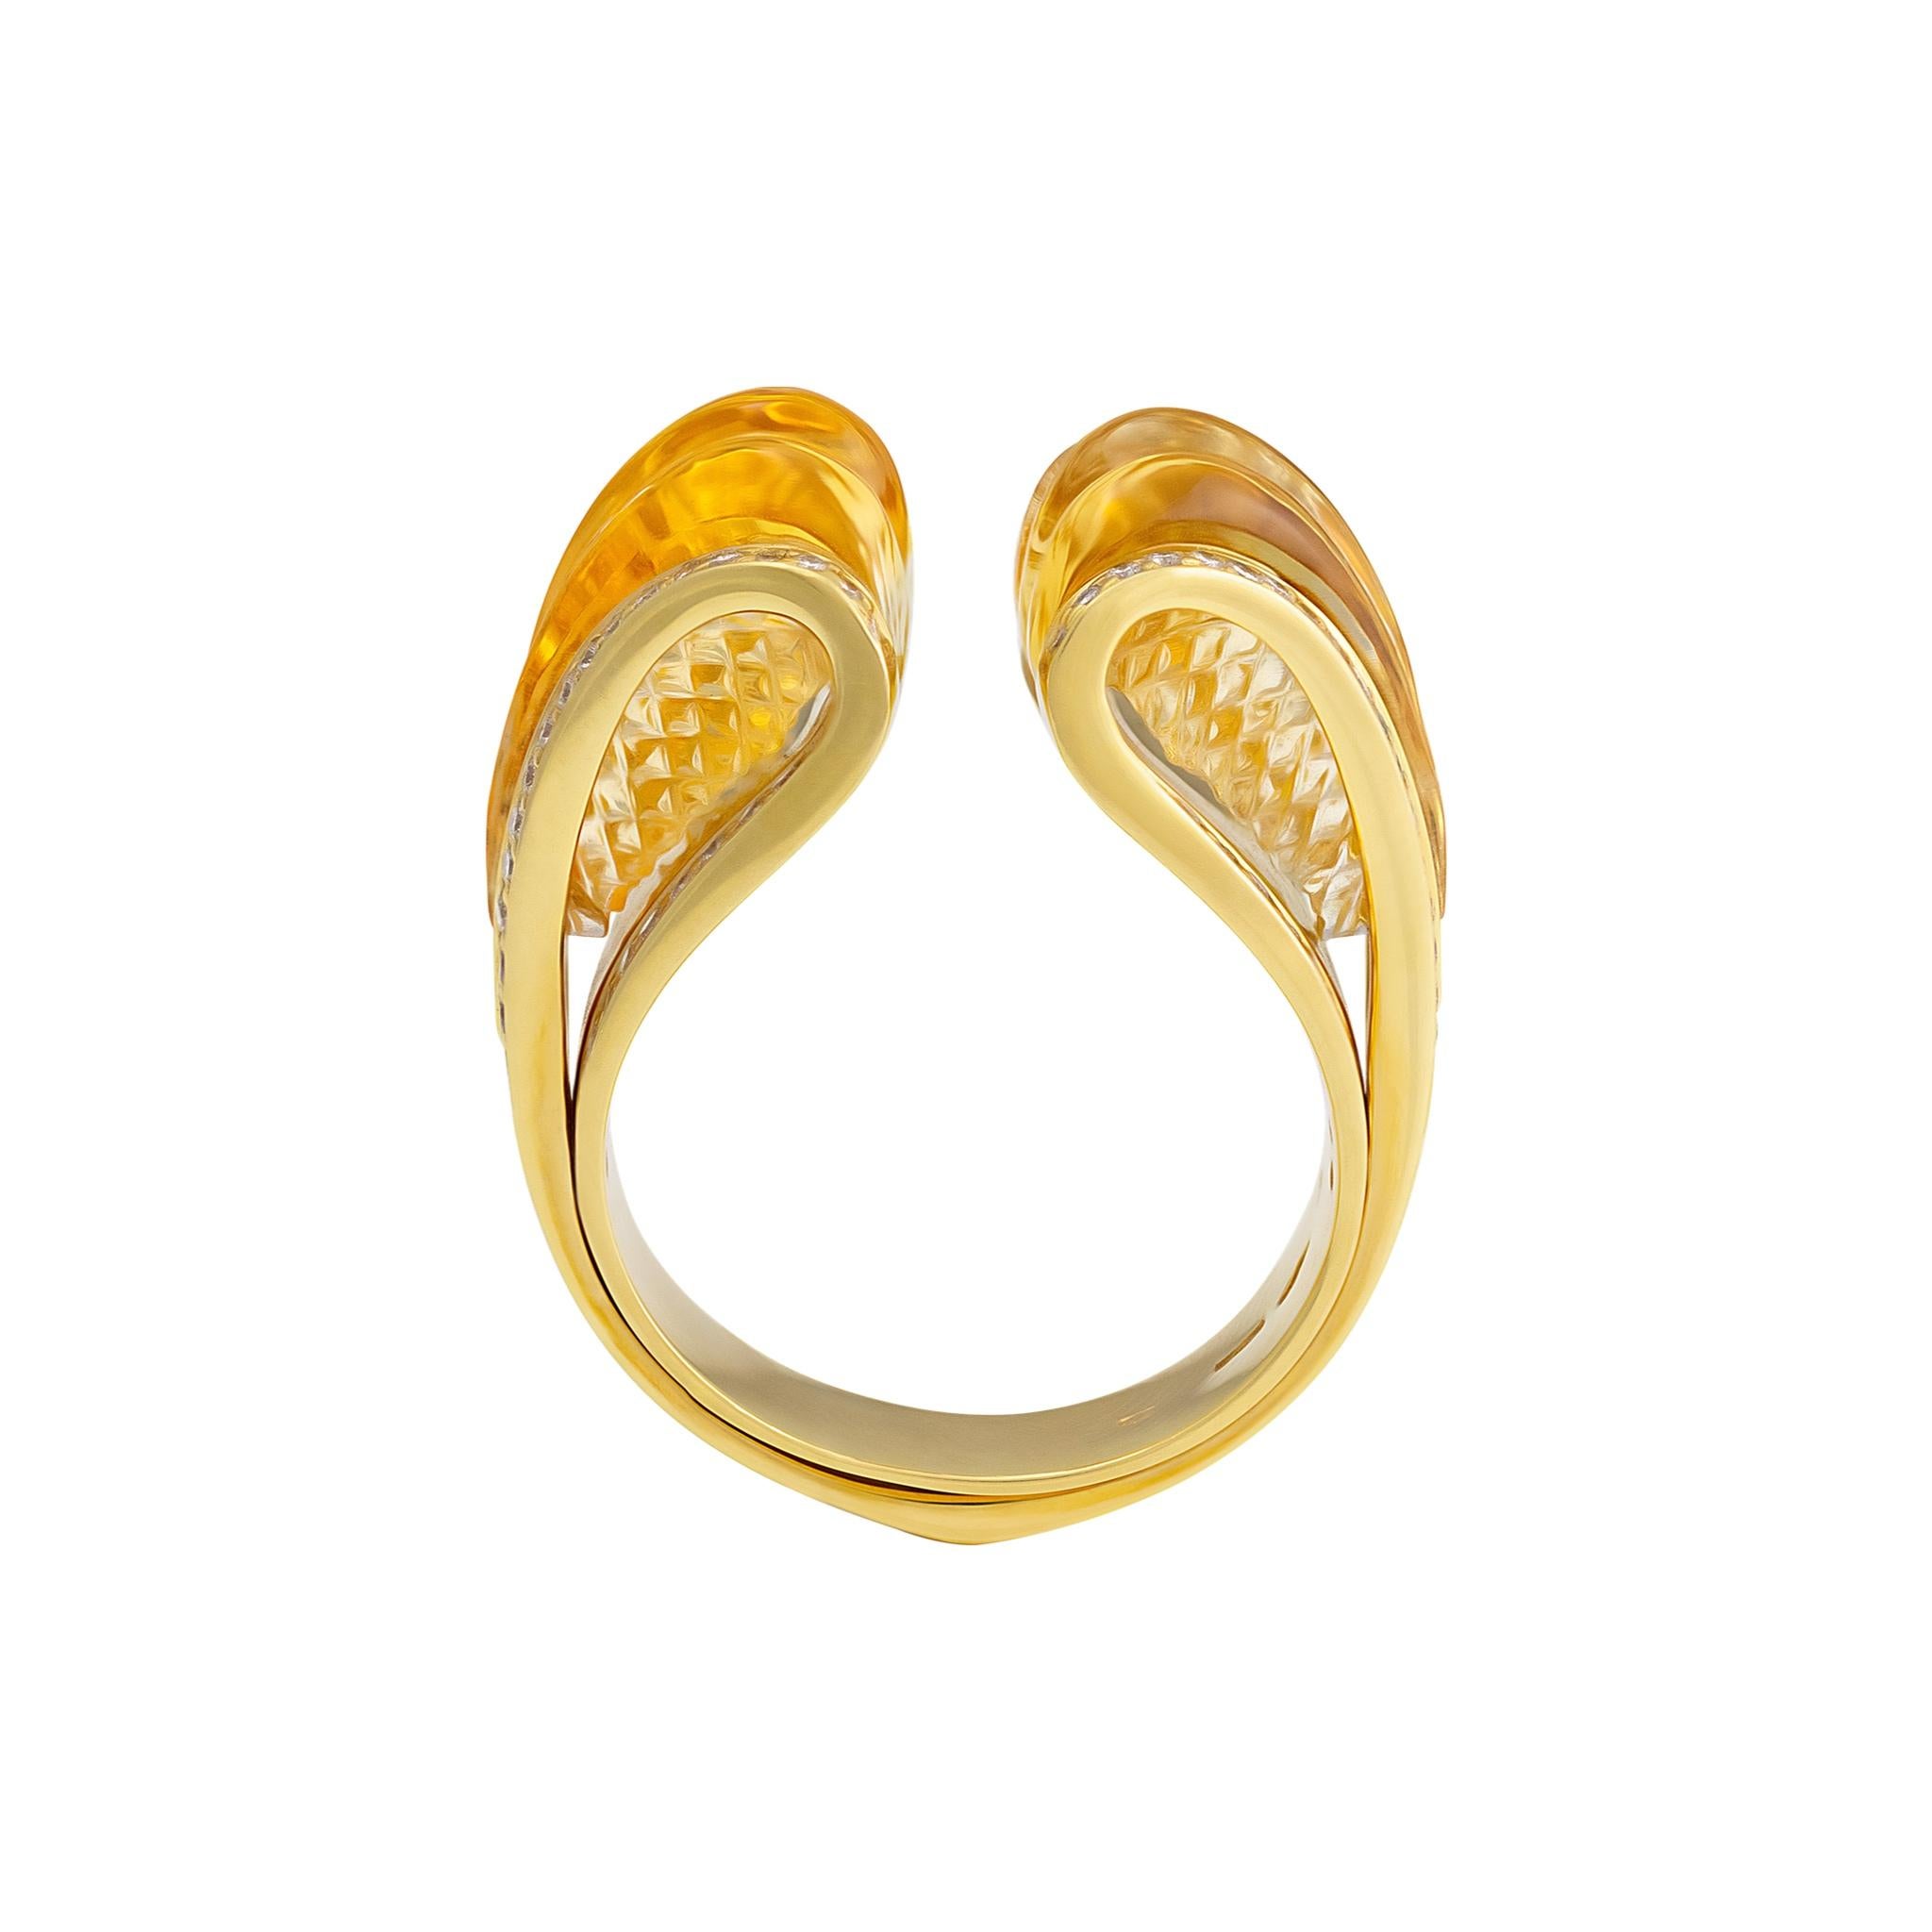 IO SI by Stefan Hafner
18K Yellow Gold
Diamond: 0.81ctw
Yellow Citrine: 2.00ctw
Size: 8.25
Retail price: $12,870.00
SKU: BLU01857